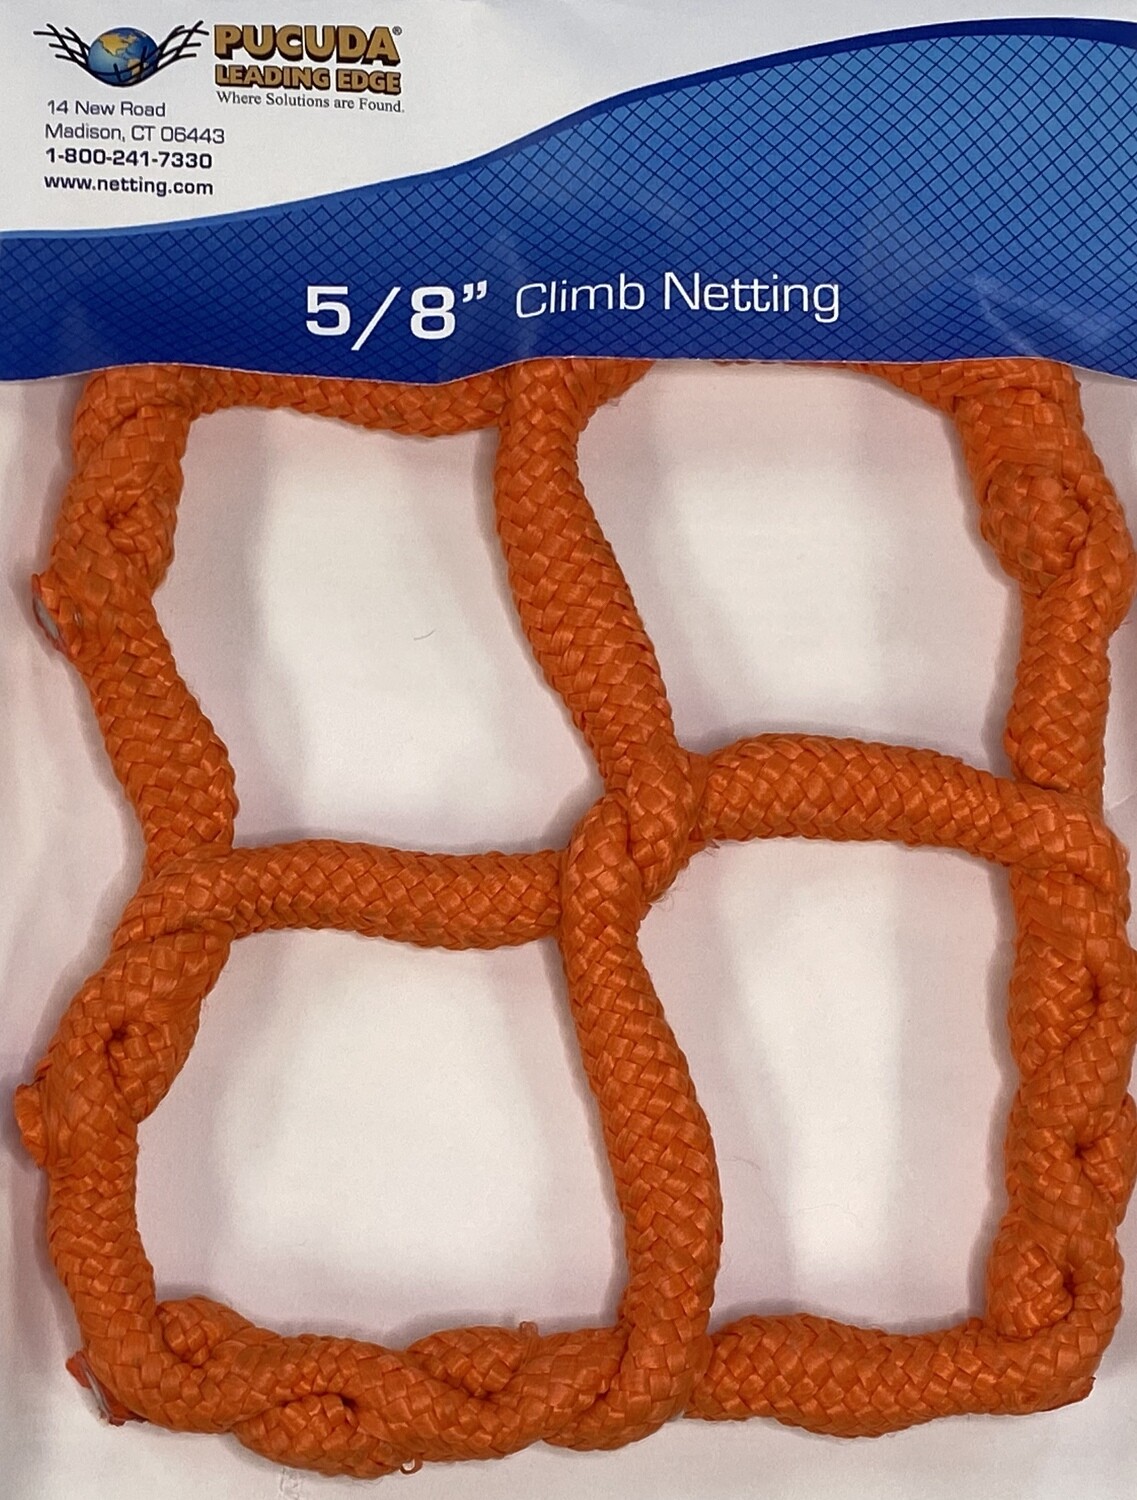 5/8” Climb Netting